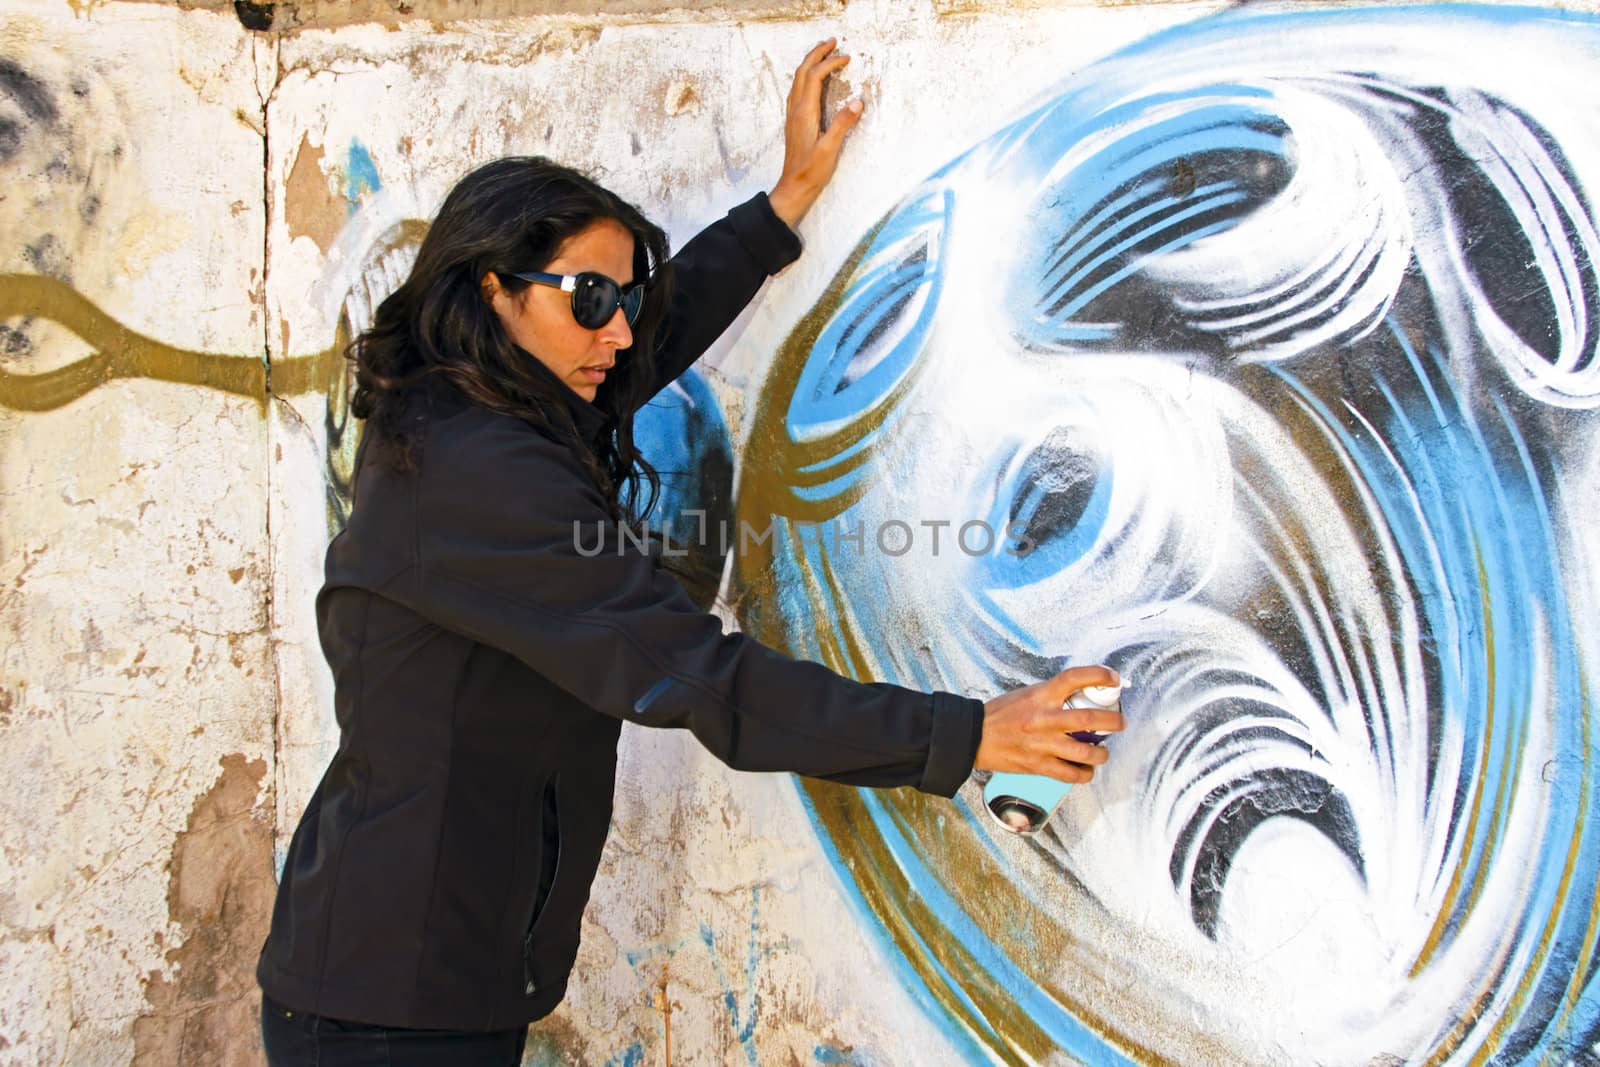 Woman in black spraying at a graffiti brick wall by devy